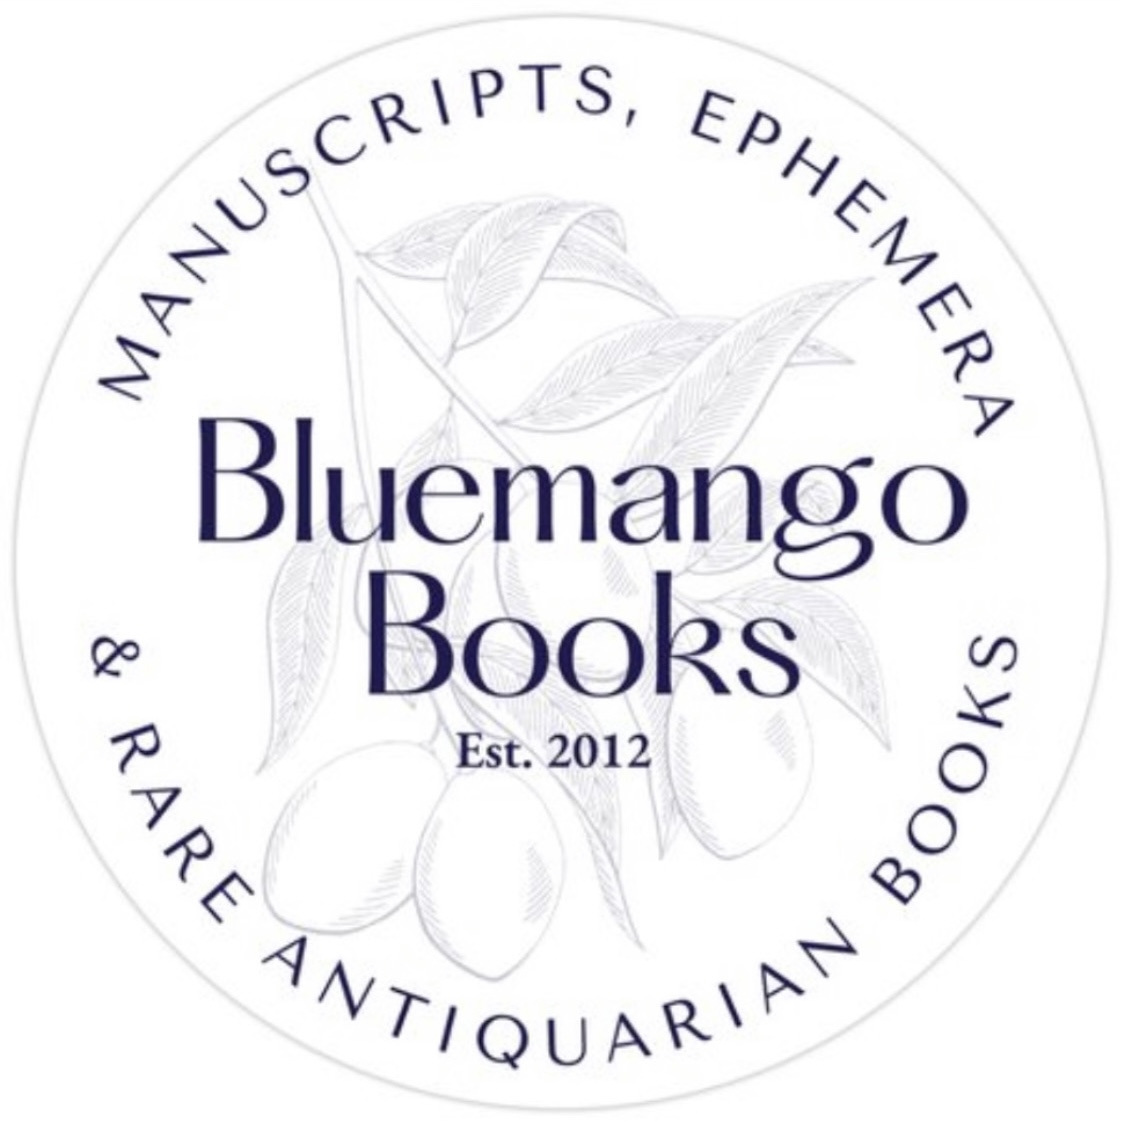 Bluemango Books & Manuscripts